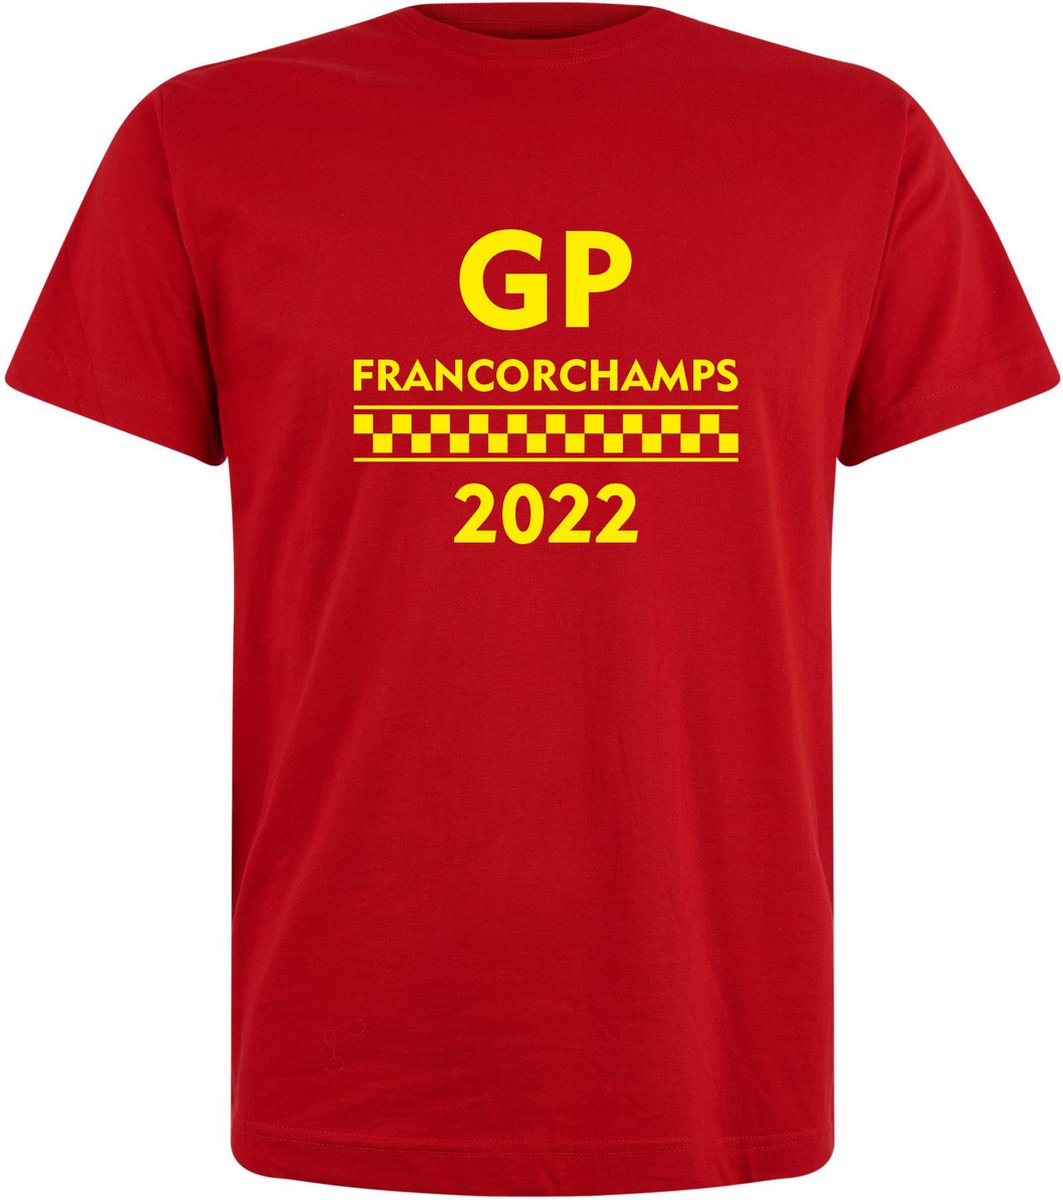 T-shirt kinderen GP Francorchamps 2022 | Max Verstappen / Red Bull Racing / Formule 1 fan | Grand Prix Circuit Spa-Francorchamps | kleding shirt | Rood | maat 164